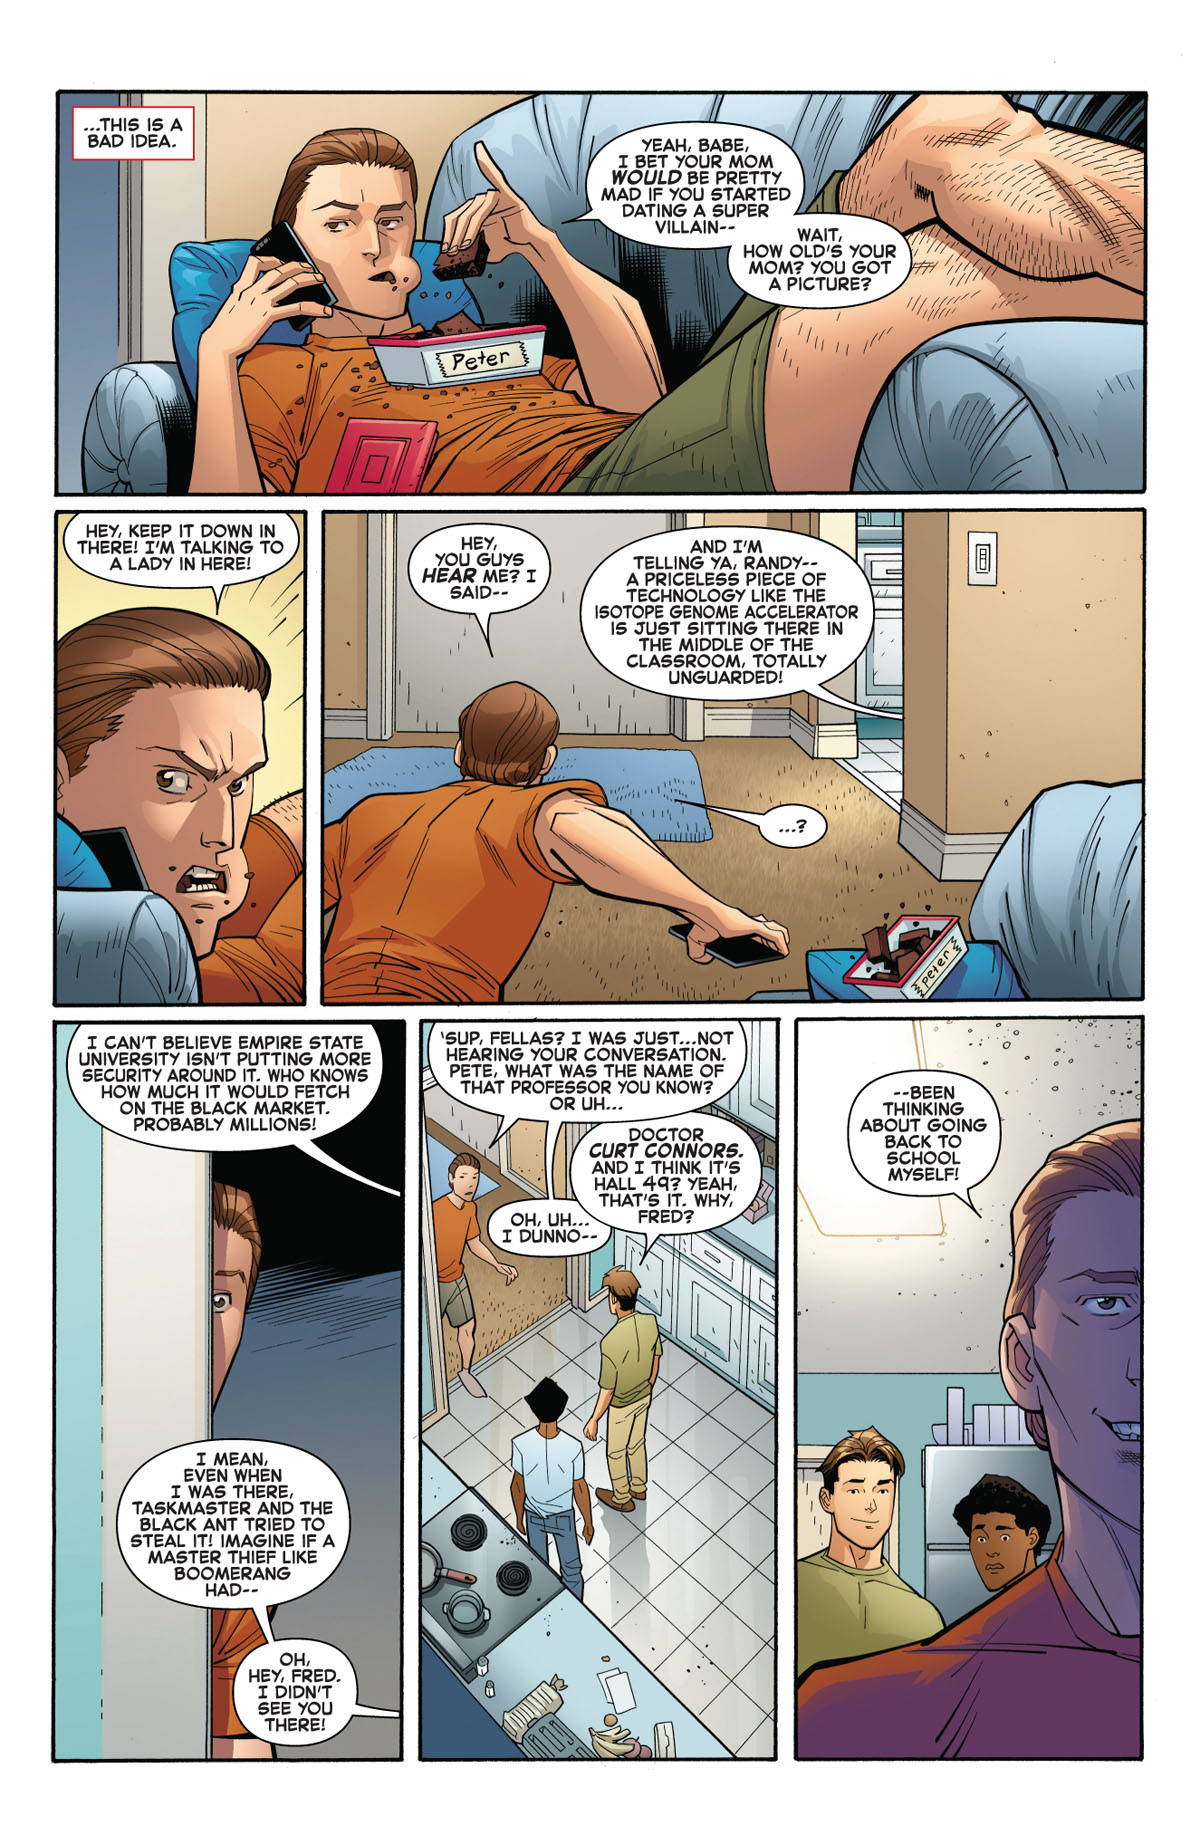 Amazing Spider-Man #5 page 4